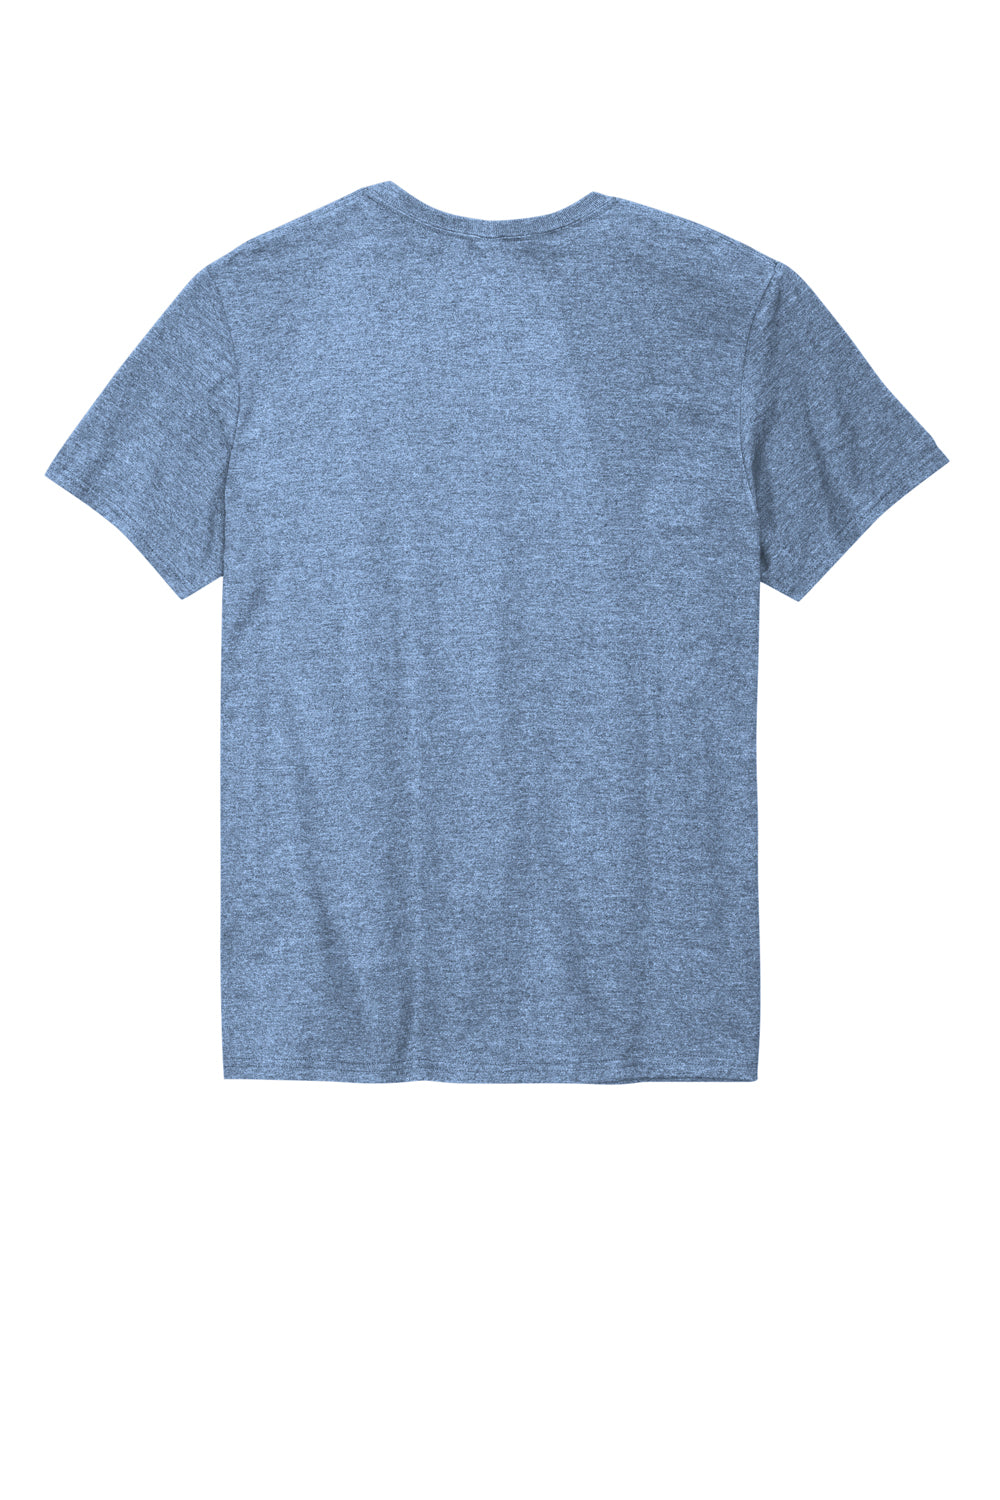 Jerzees 560M Mens Premium Blend Ring Spun Short Sleeve Crewneck T-Shirt Heather Carolina Blue Flat Back